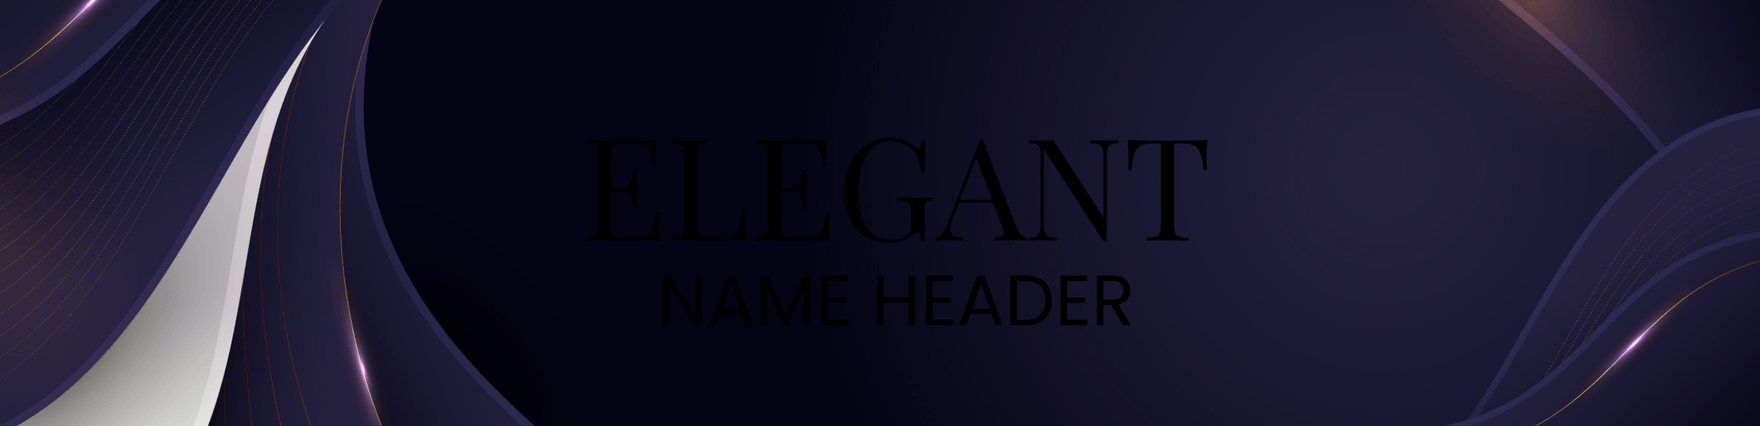 Elegant Name Header